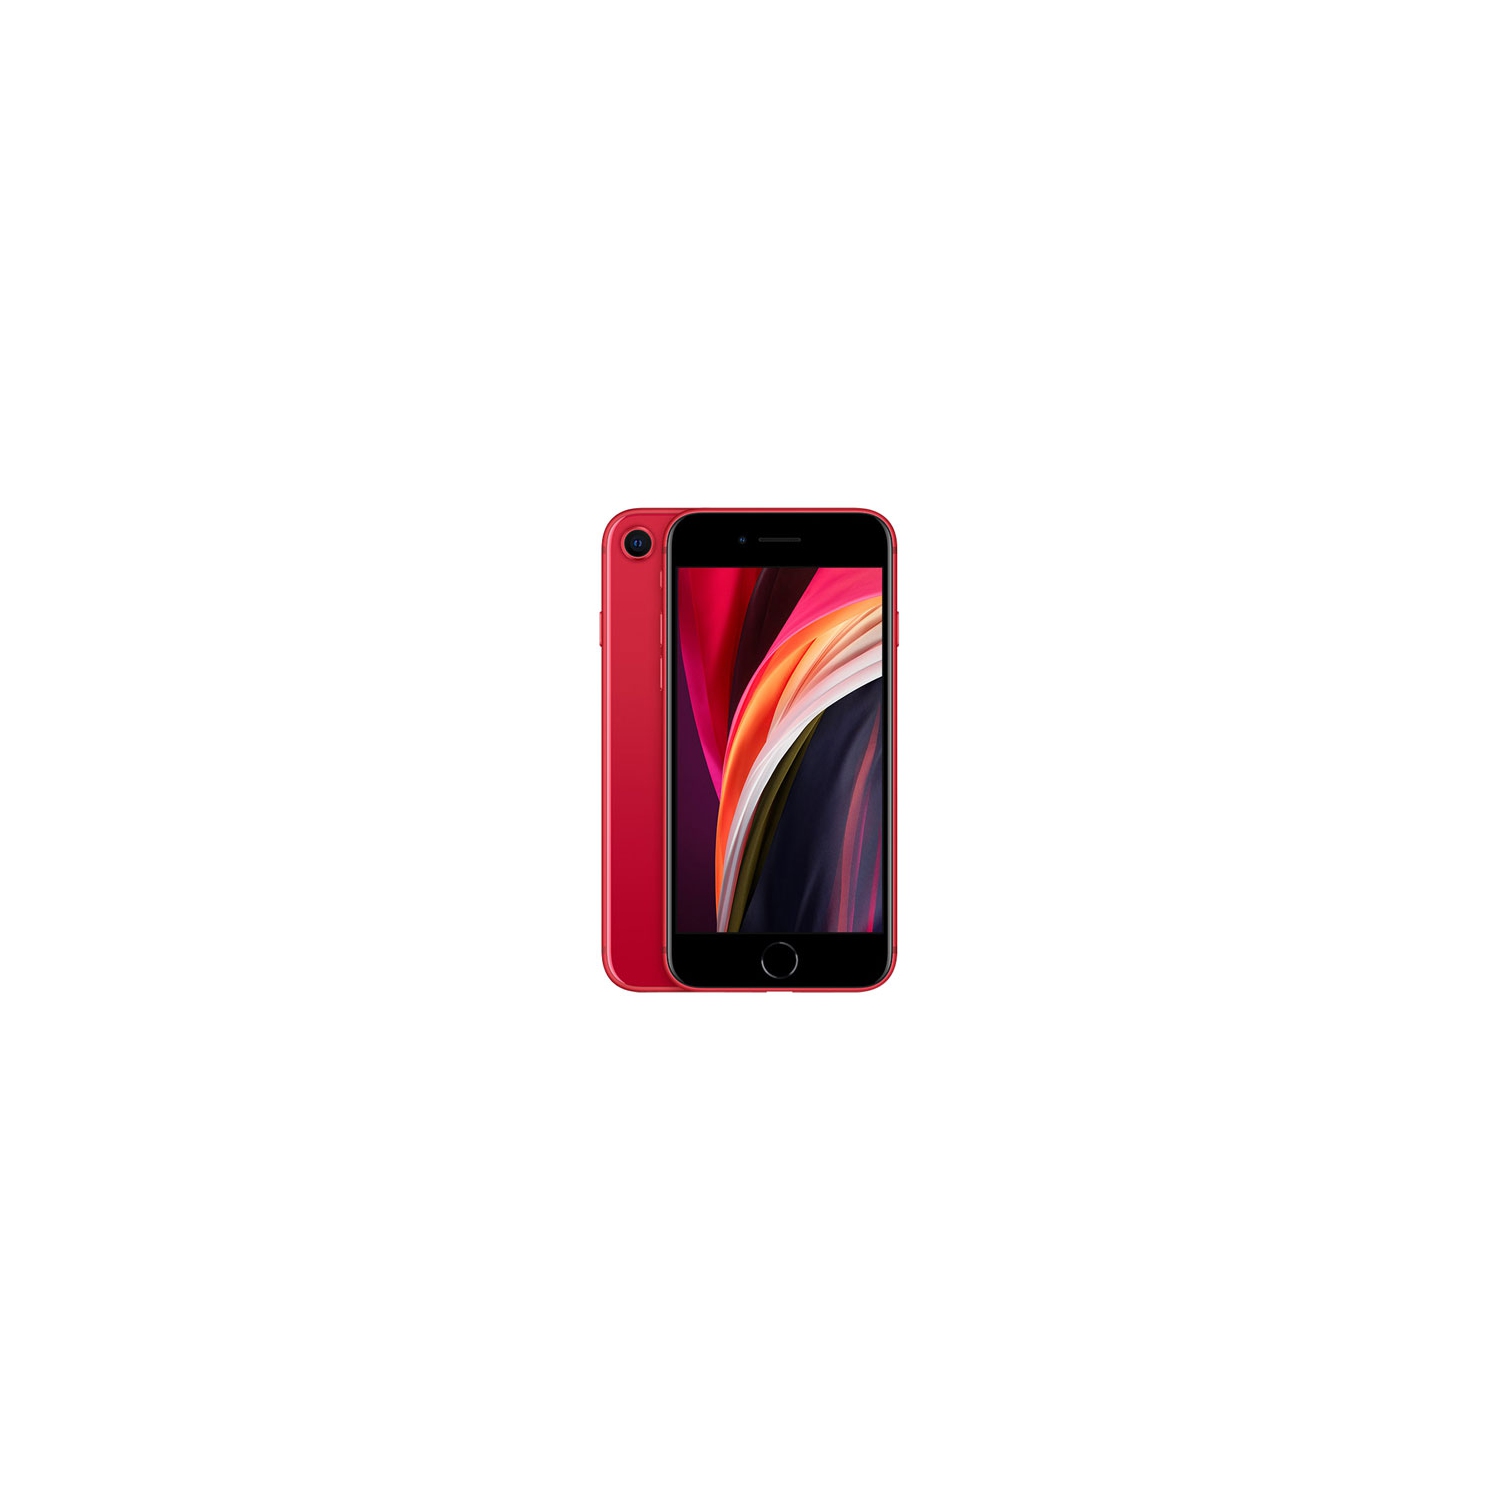 Refurbished (Good) - Apple iPhone SE (2nd generation) 64GB Smartphone - Red - Unlocked